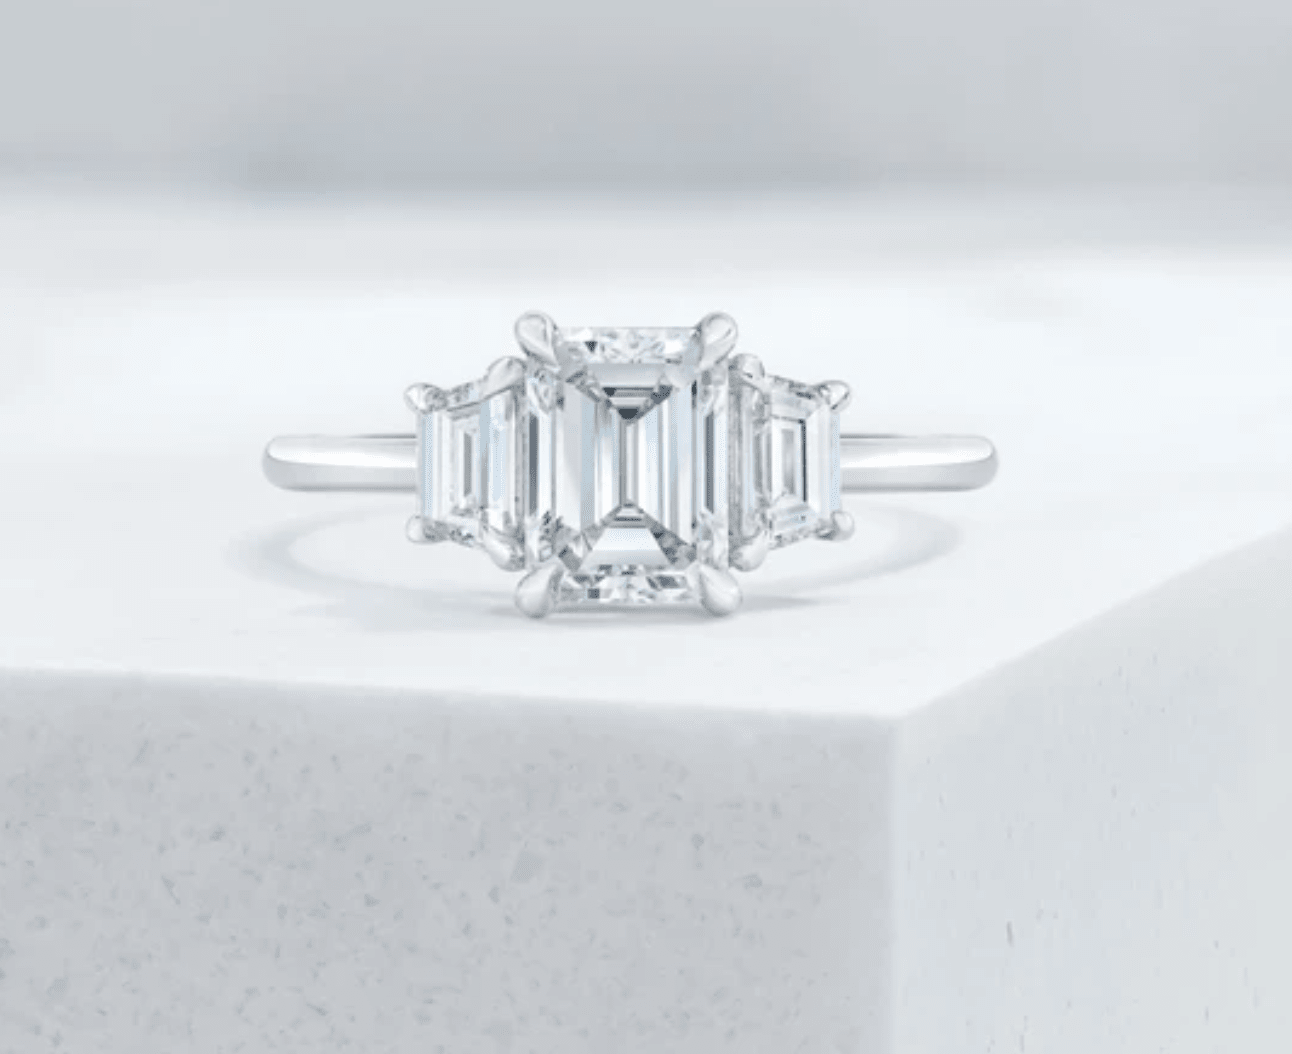 Diamond Ring Design 2021 | escapeauthority.com